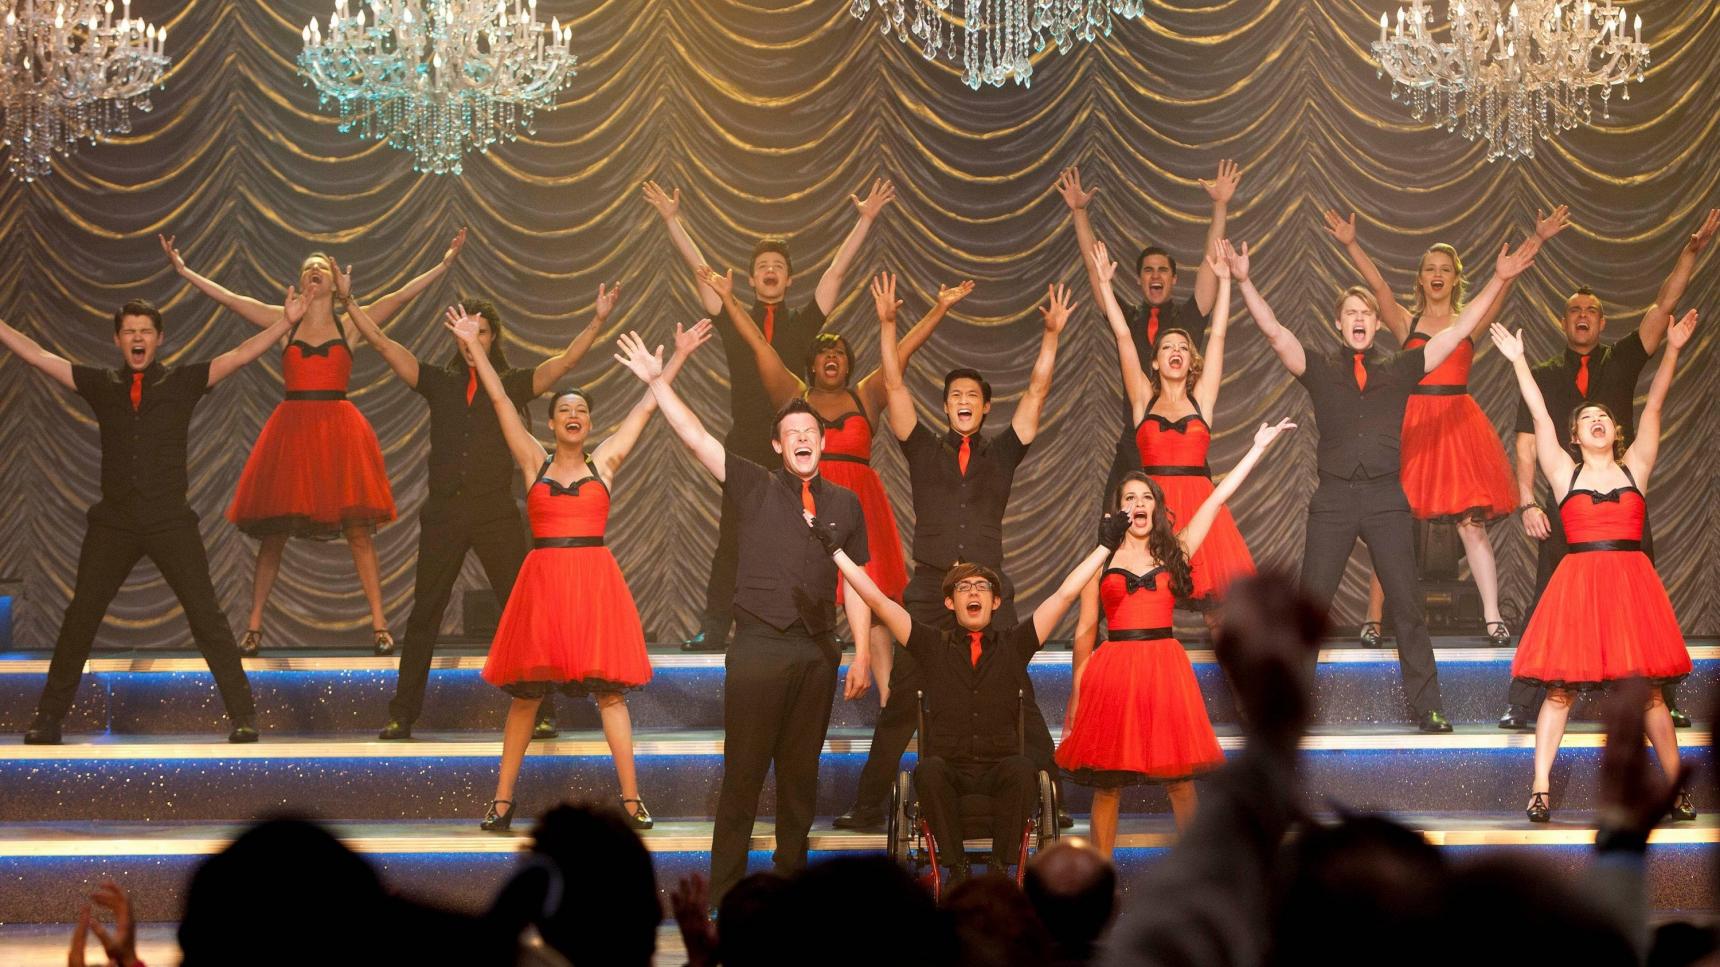 Poster del episodio 21 de Glee online